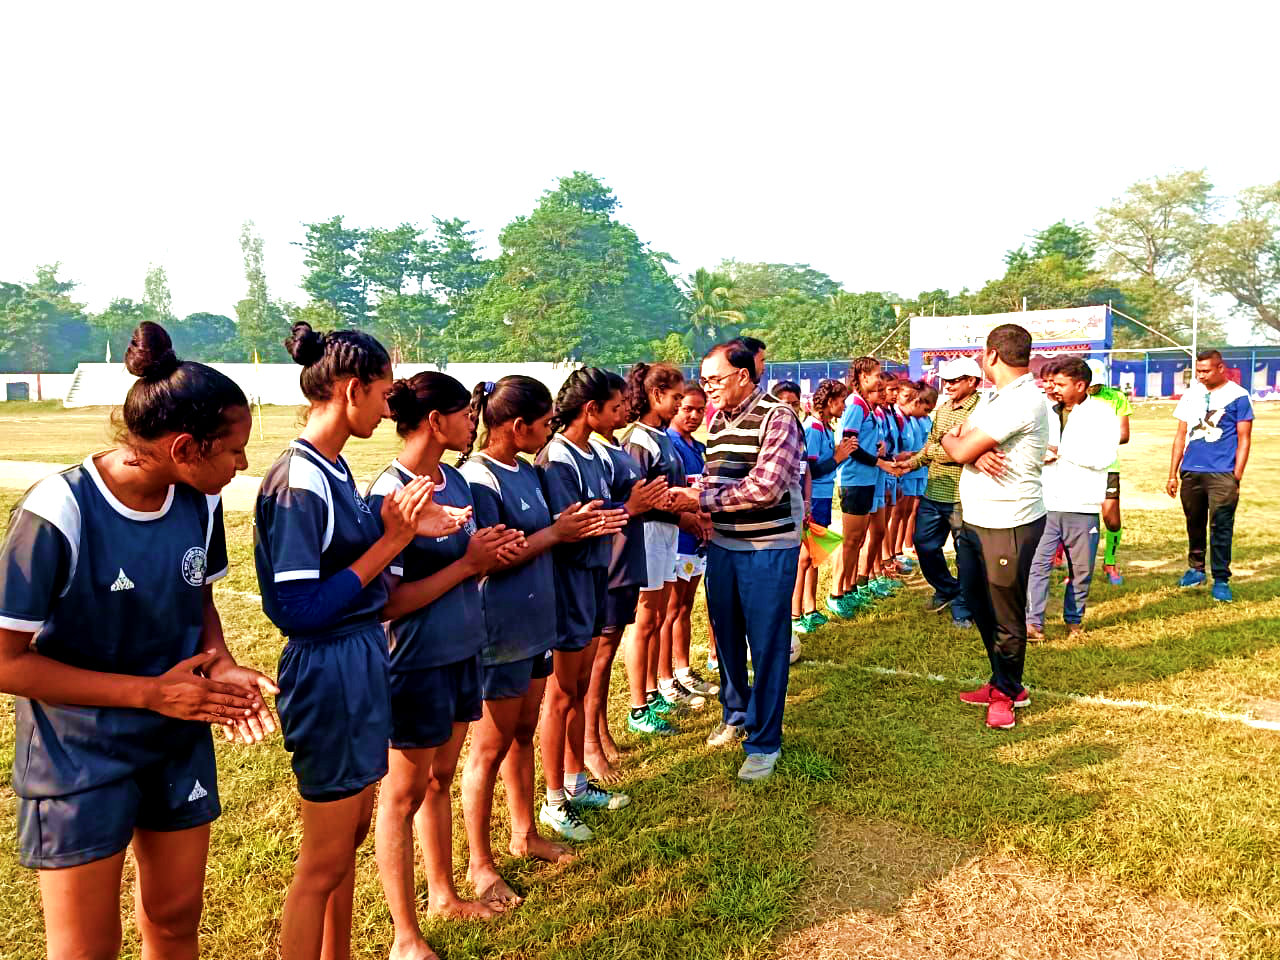 Dr.Madhepuri being aquainted with Rugby Players at the ground of BN Mandal Stadium, Madhepura.